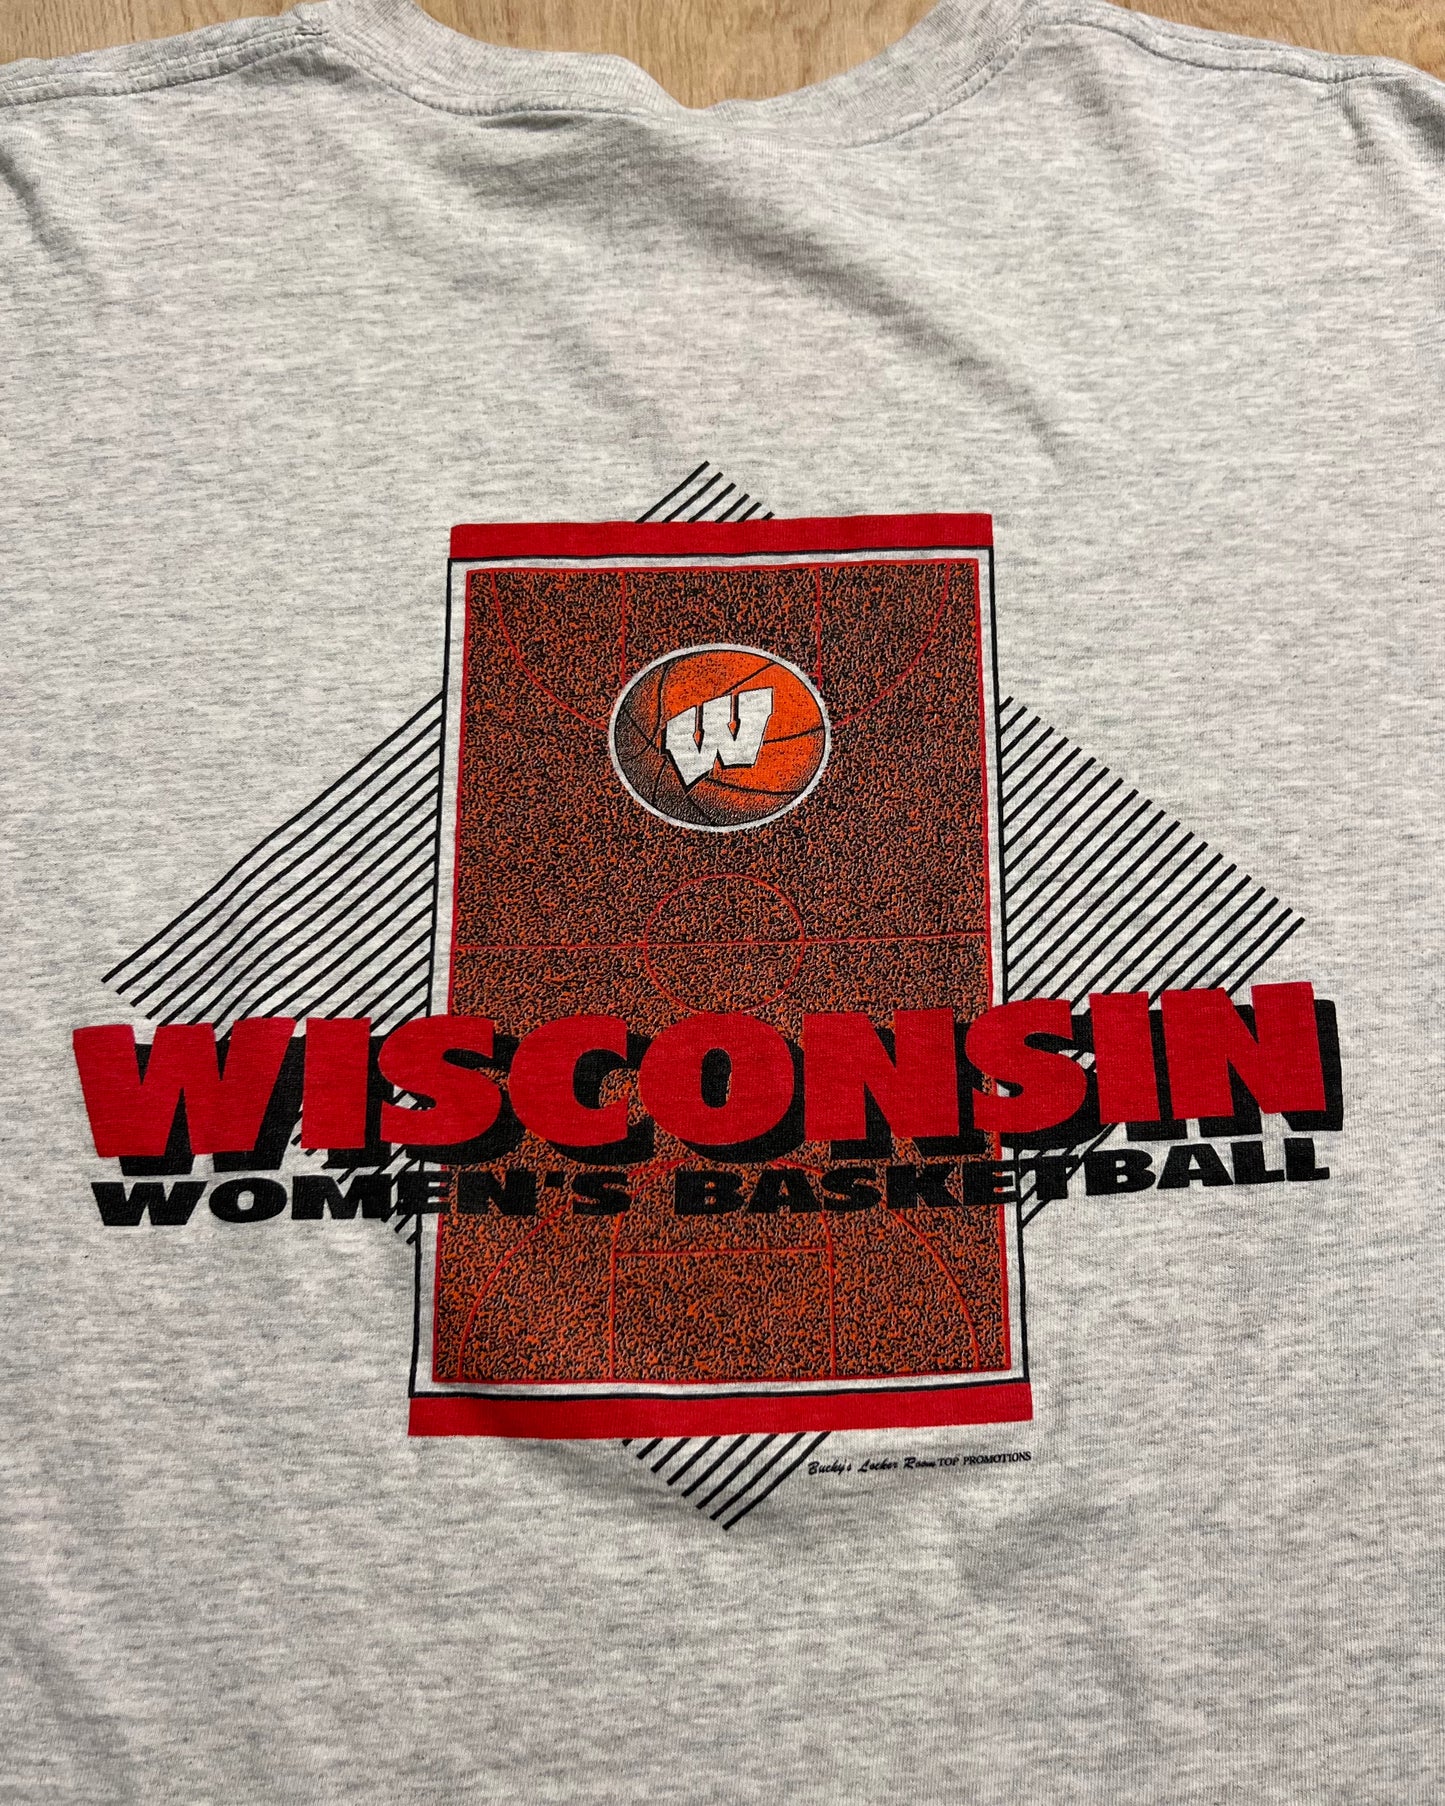 1990's Wisconsin Womens Basketball "Badgerball is Life" T-Shirt